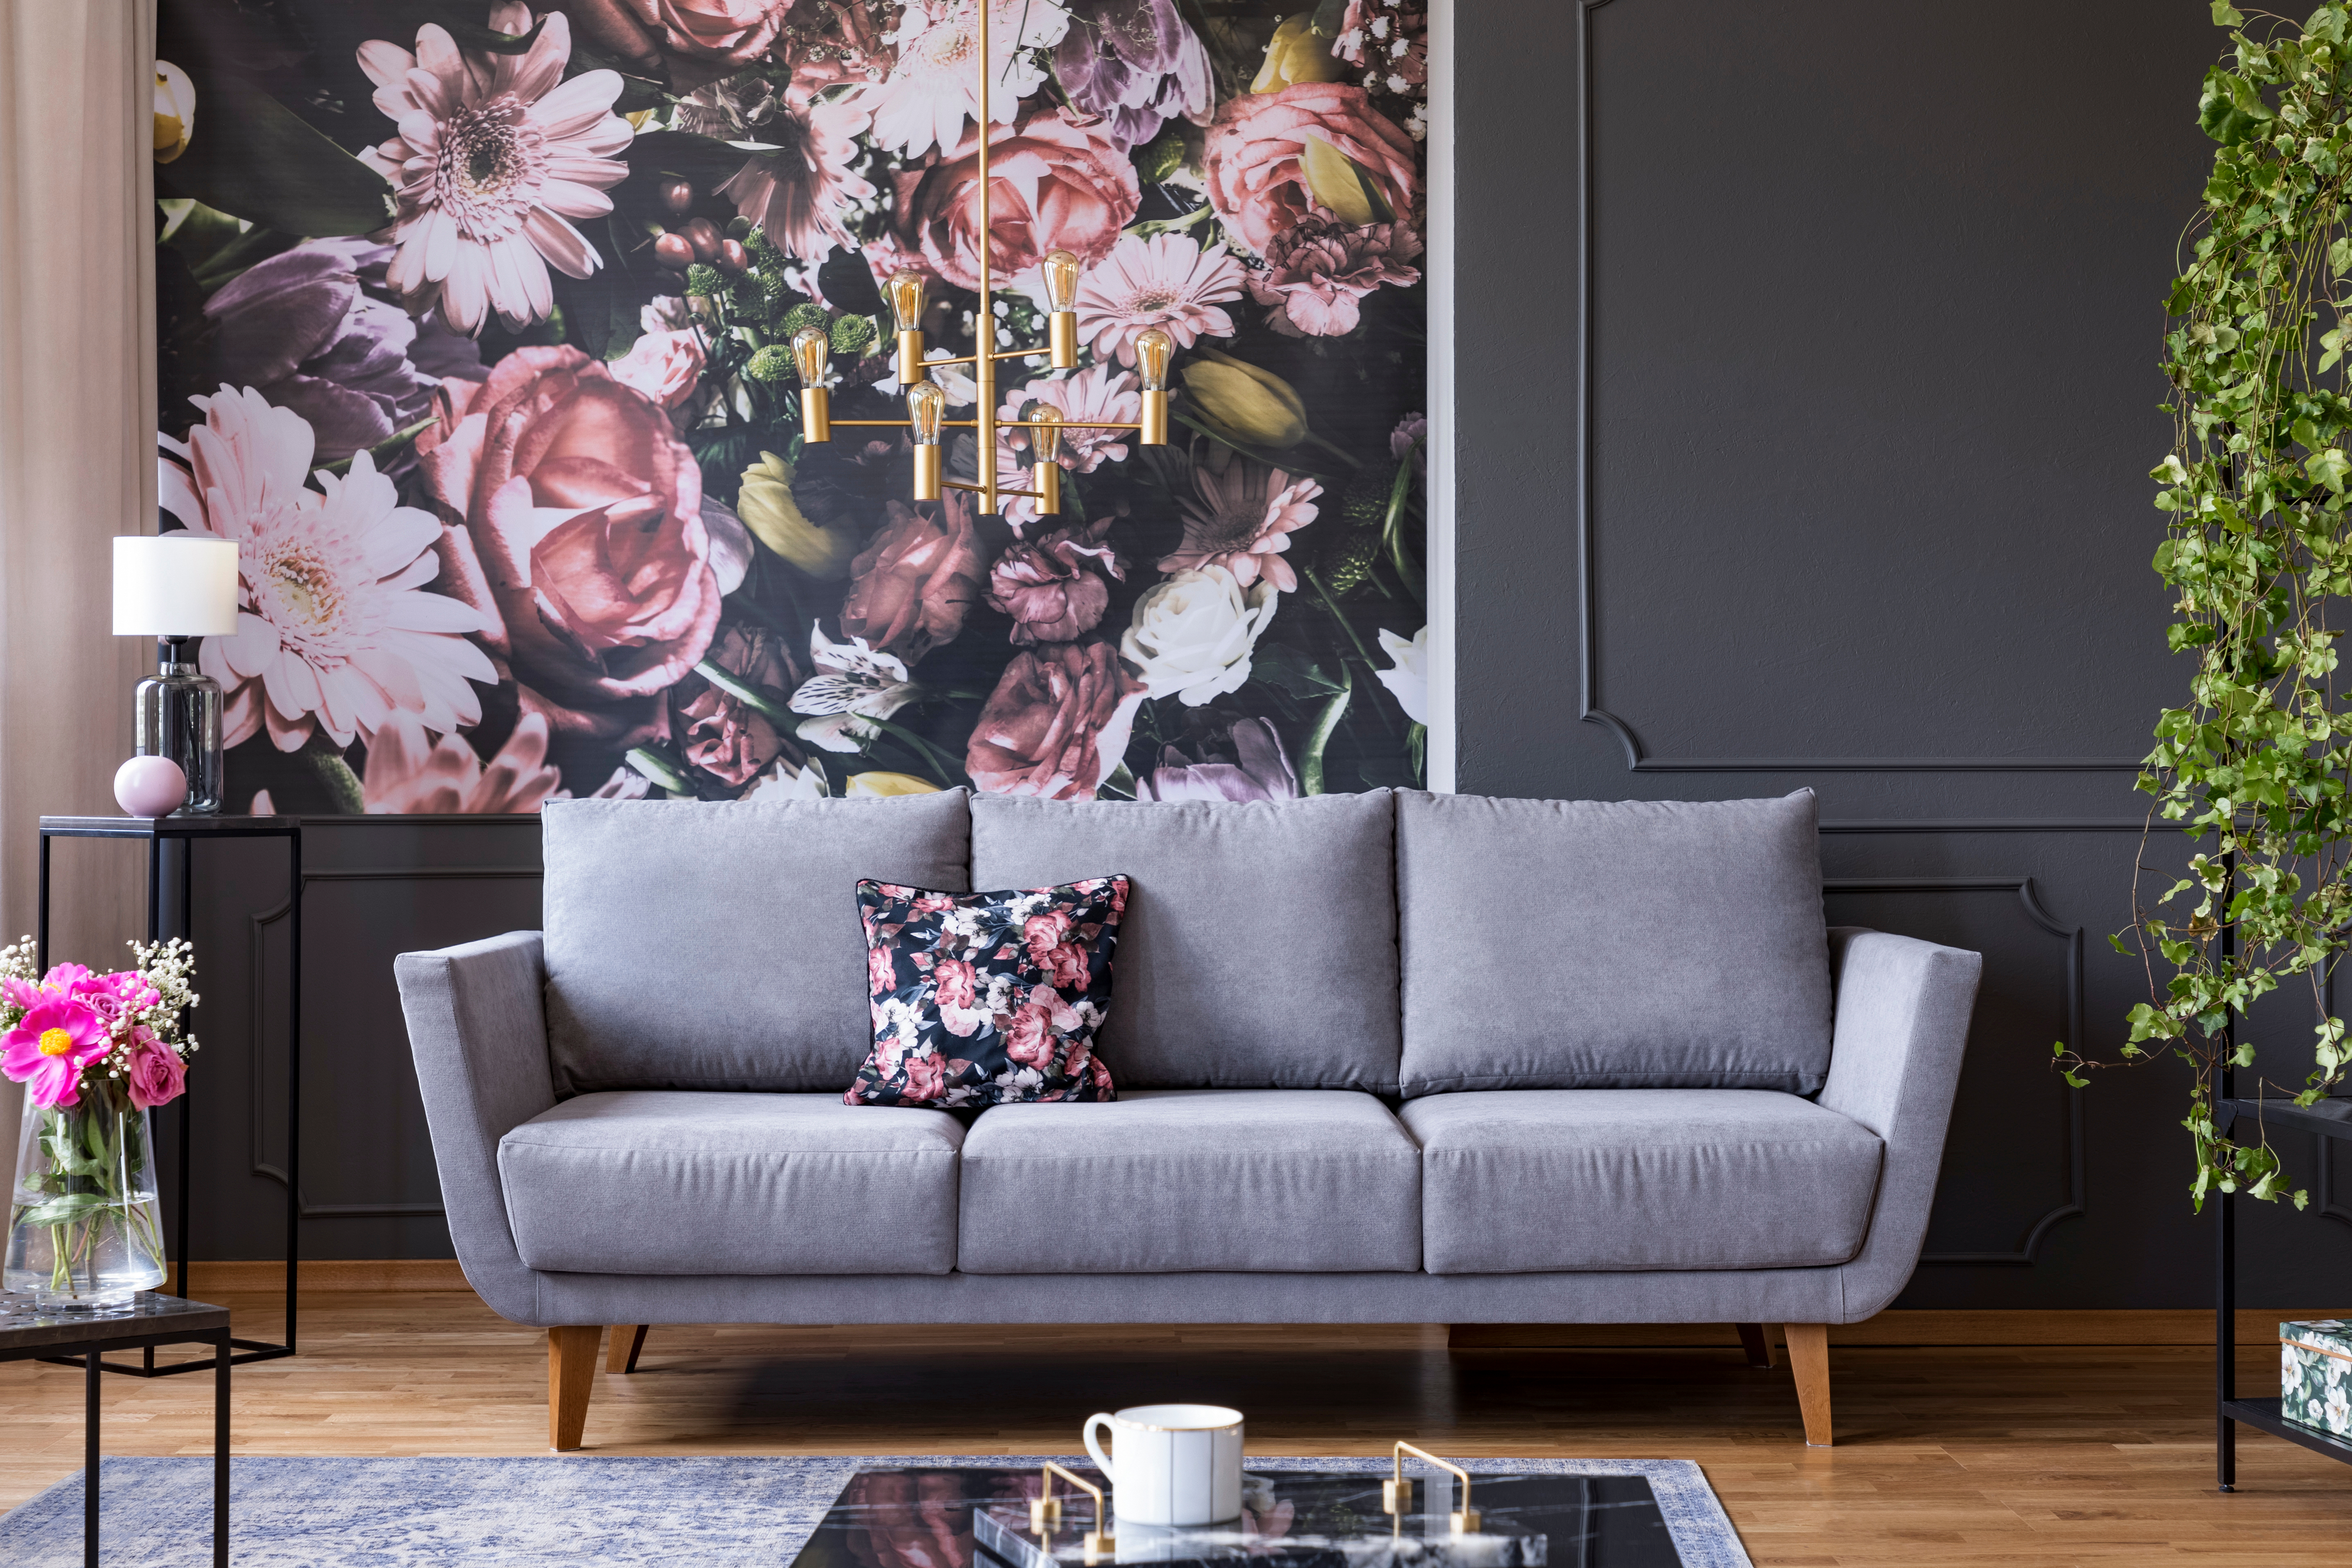 20 New Wall Designs for the Living Room in 20   HomeLane Blog